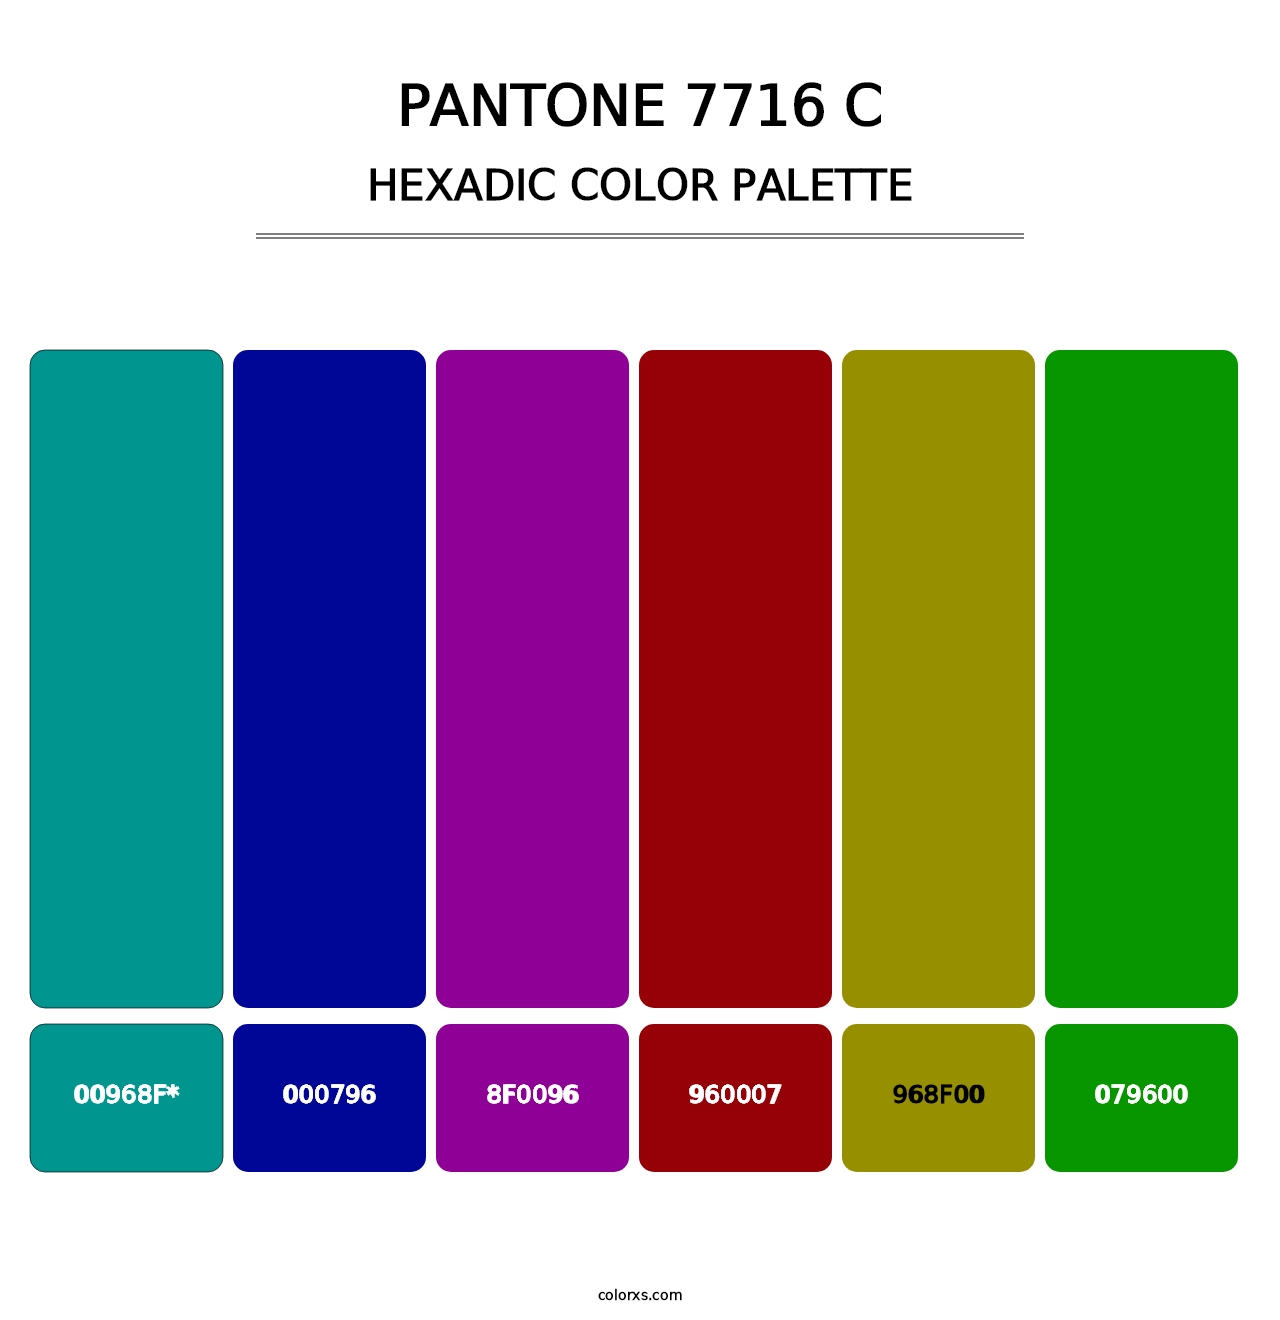 PANTONE 7716 C - Hexadic Color Palette